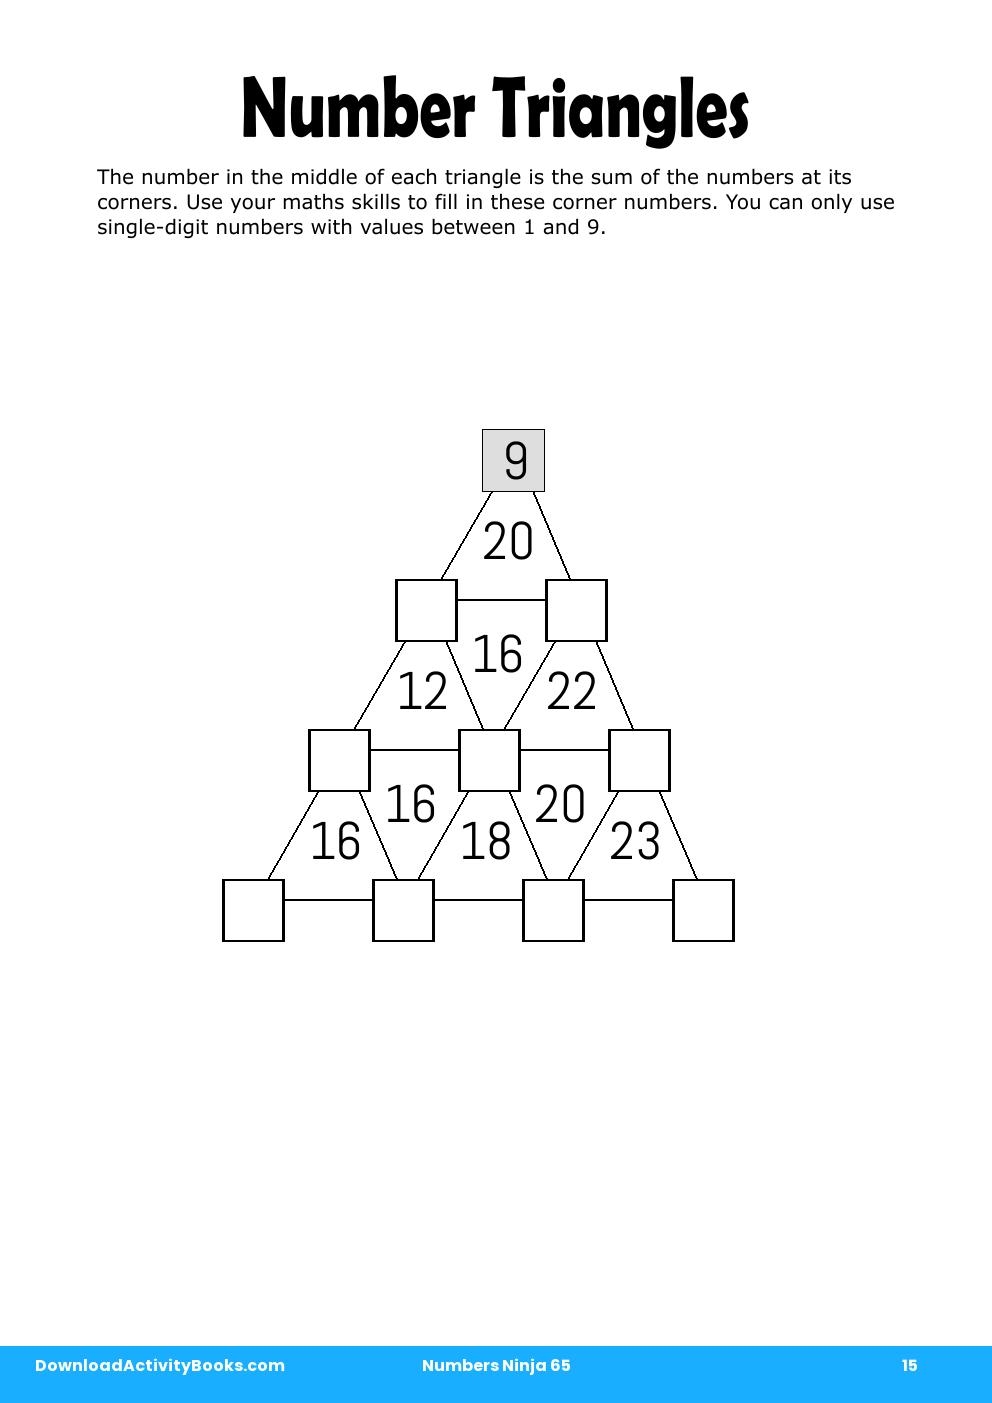 Number Triangles in Numbers Ninja 65